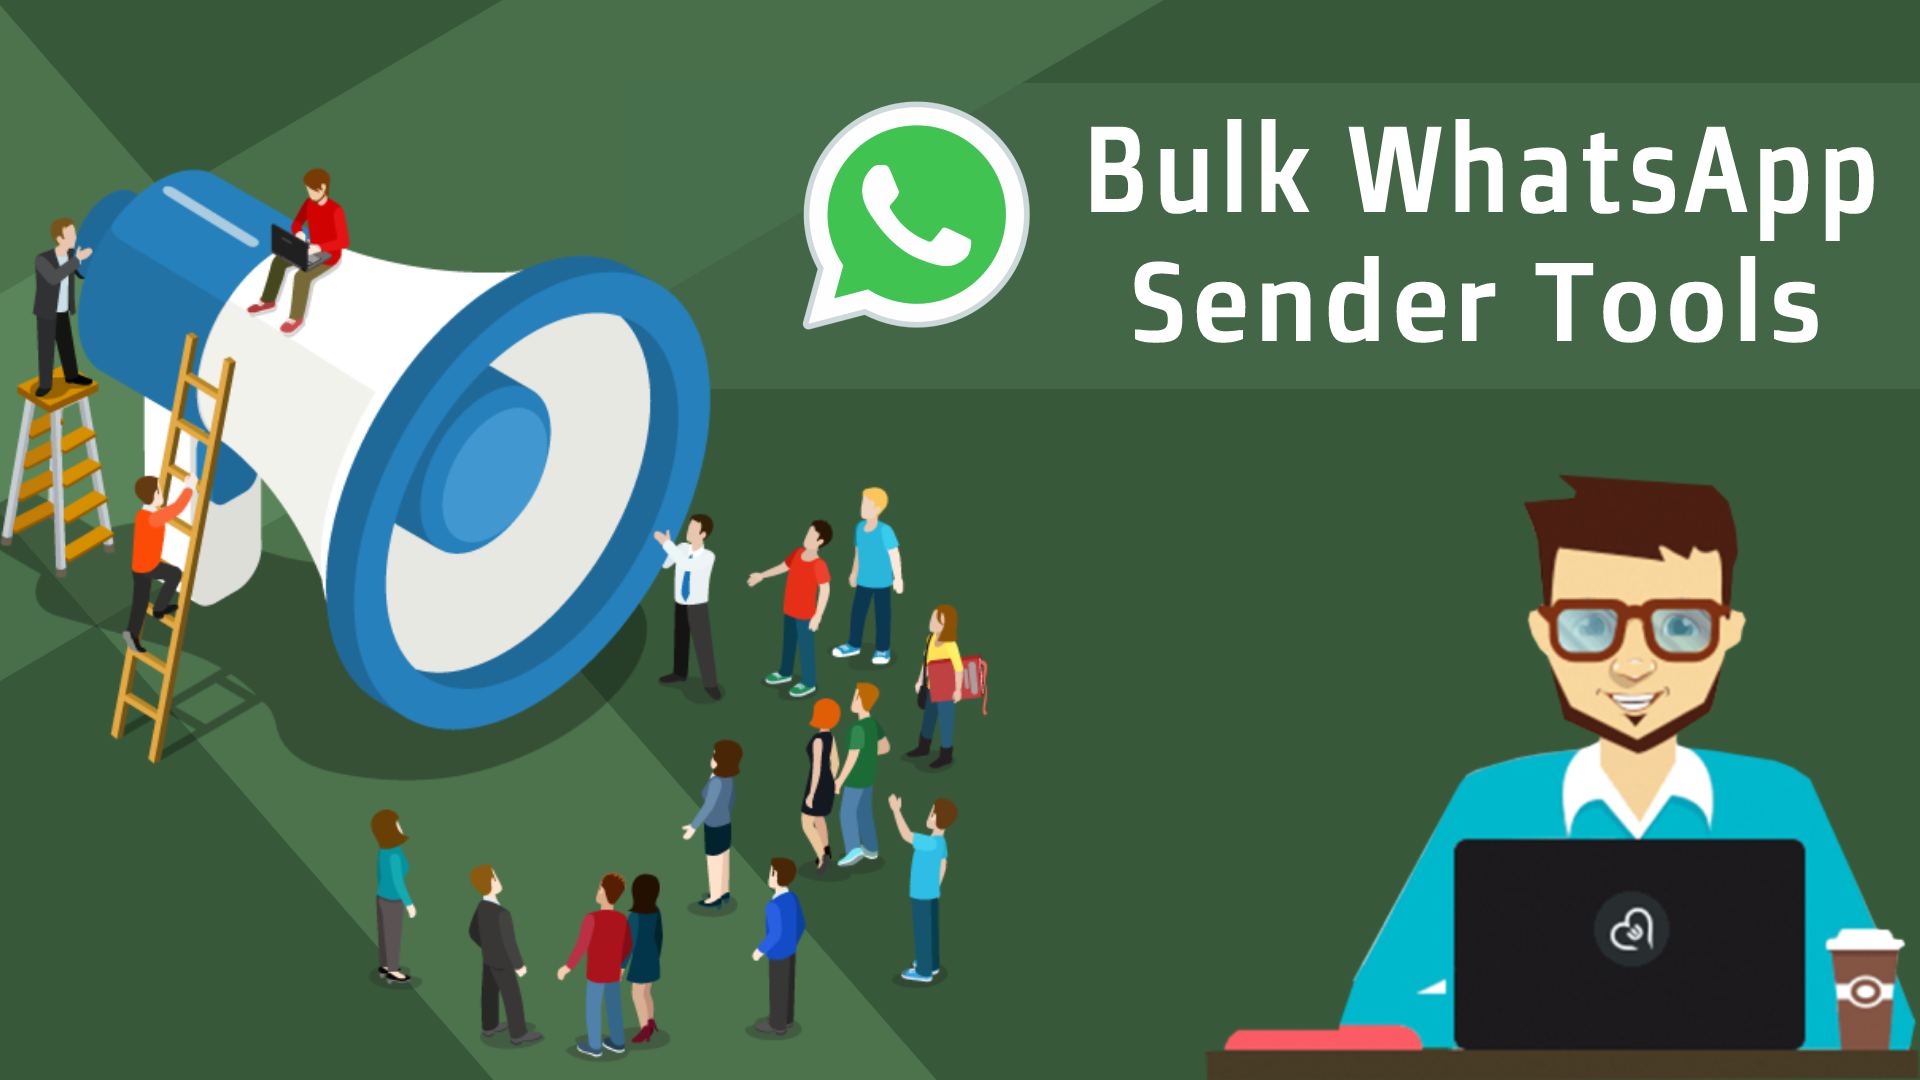 Whatsapp, Whatsapp marketing,Bulk Messages,whatsapp Business,bulk whatsapp sender tools ,message tools